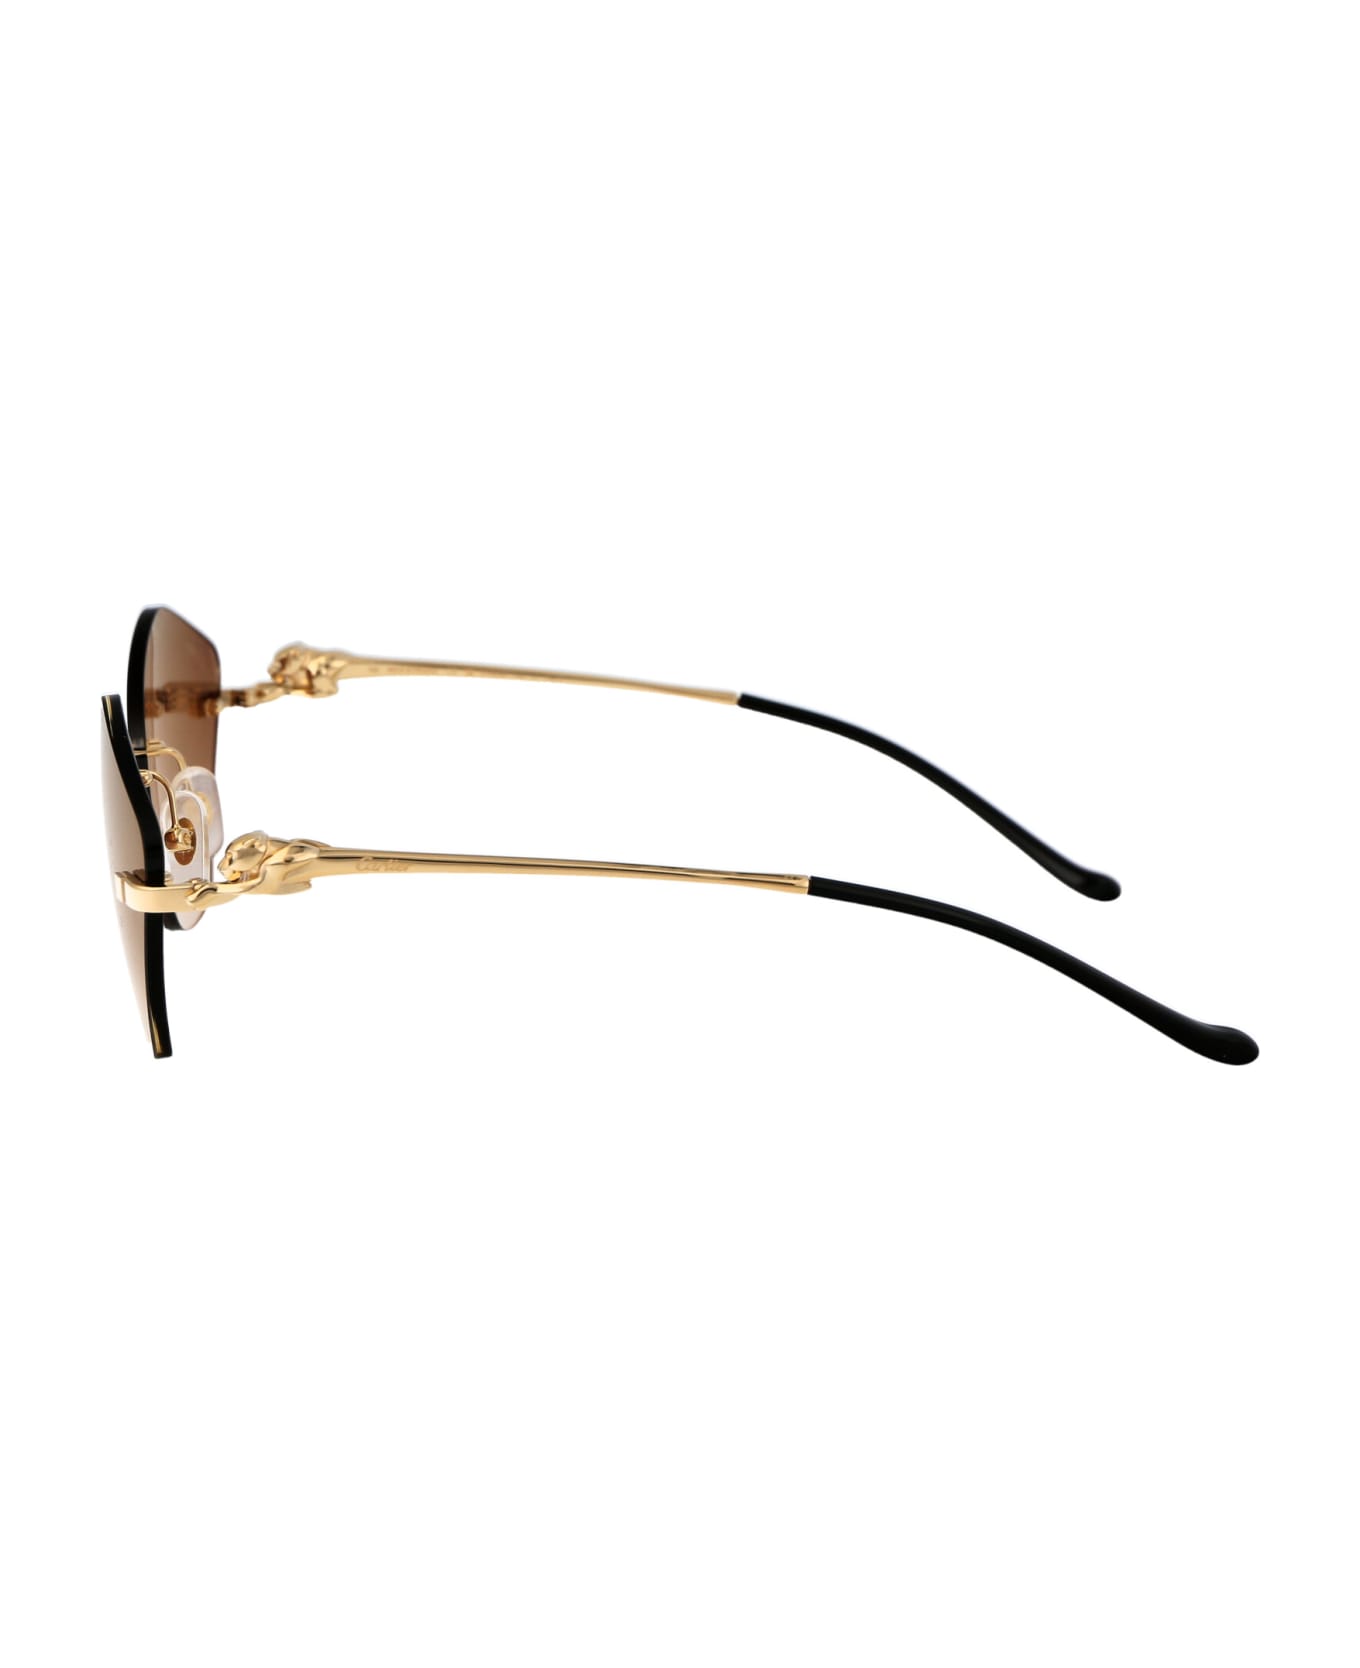 Cartier Eyewear Ct0429s Sunglasses - 002 GOLD GOLD BROWN サングラス